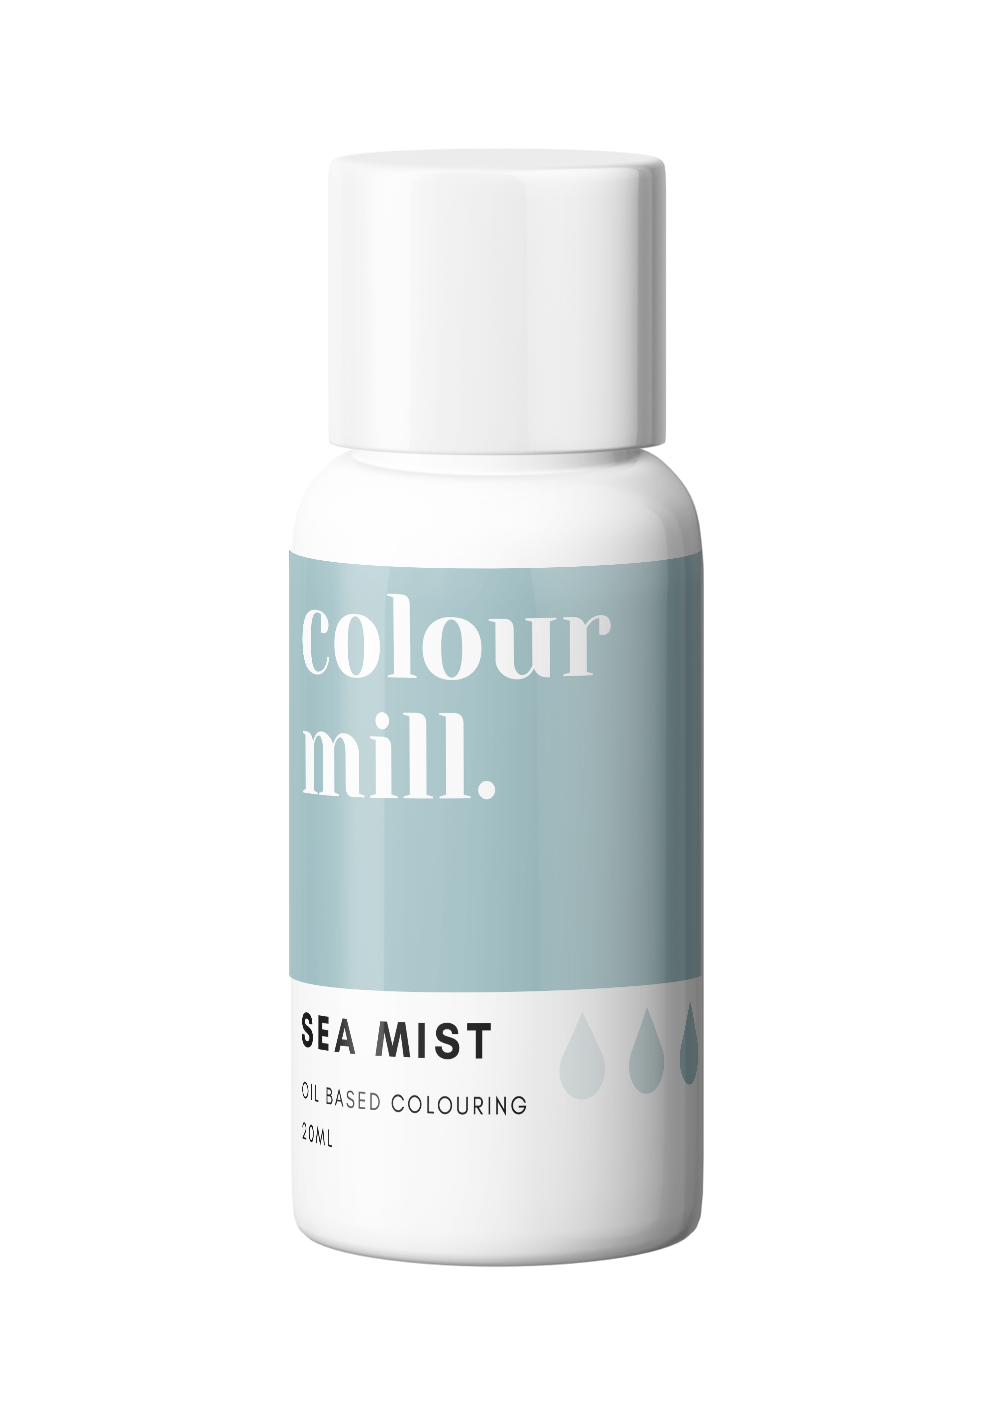 Colour Mill Oil Based Colouring 20ml - Sea Mist